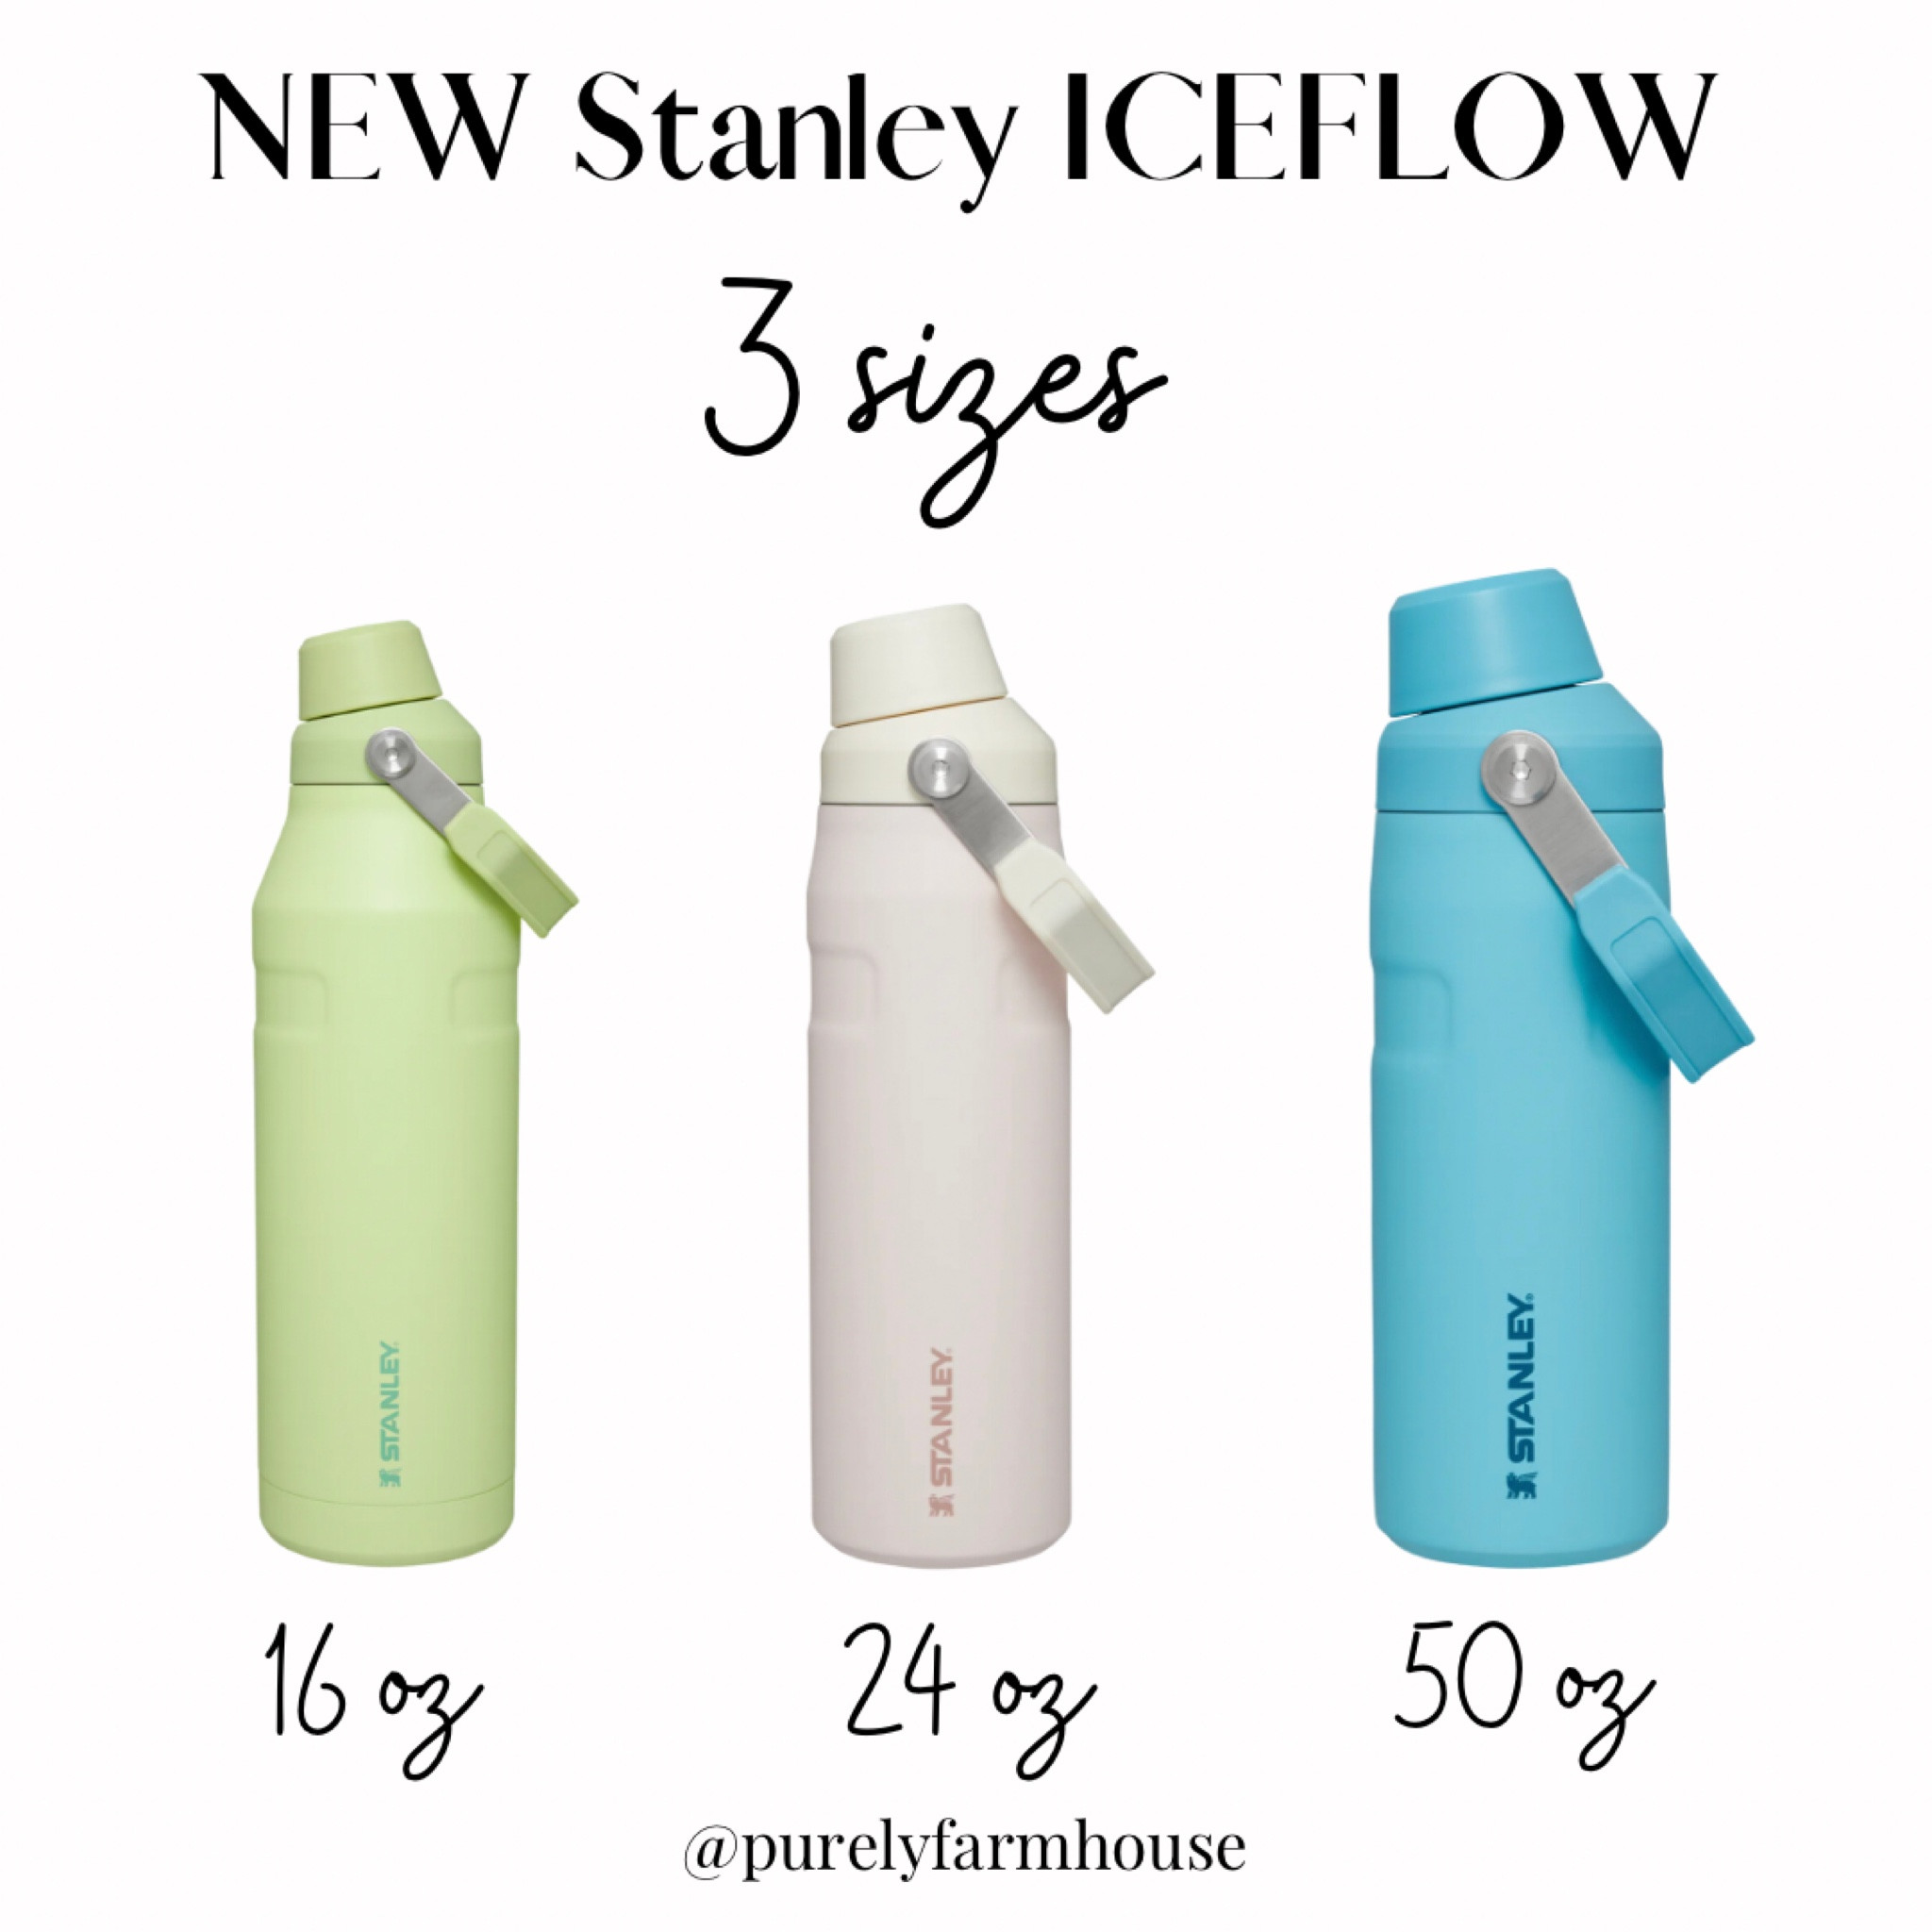 Best Stanley deal: save 25% on Stanley AeroLight bottles at Target